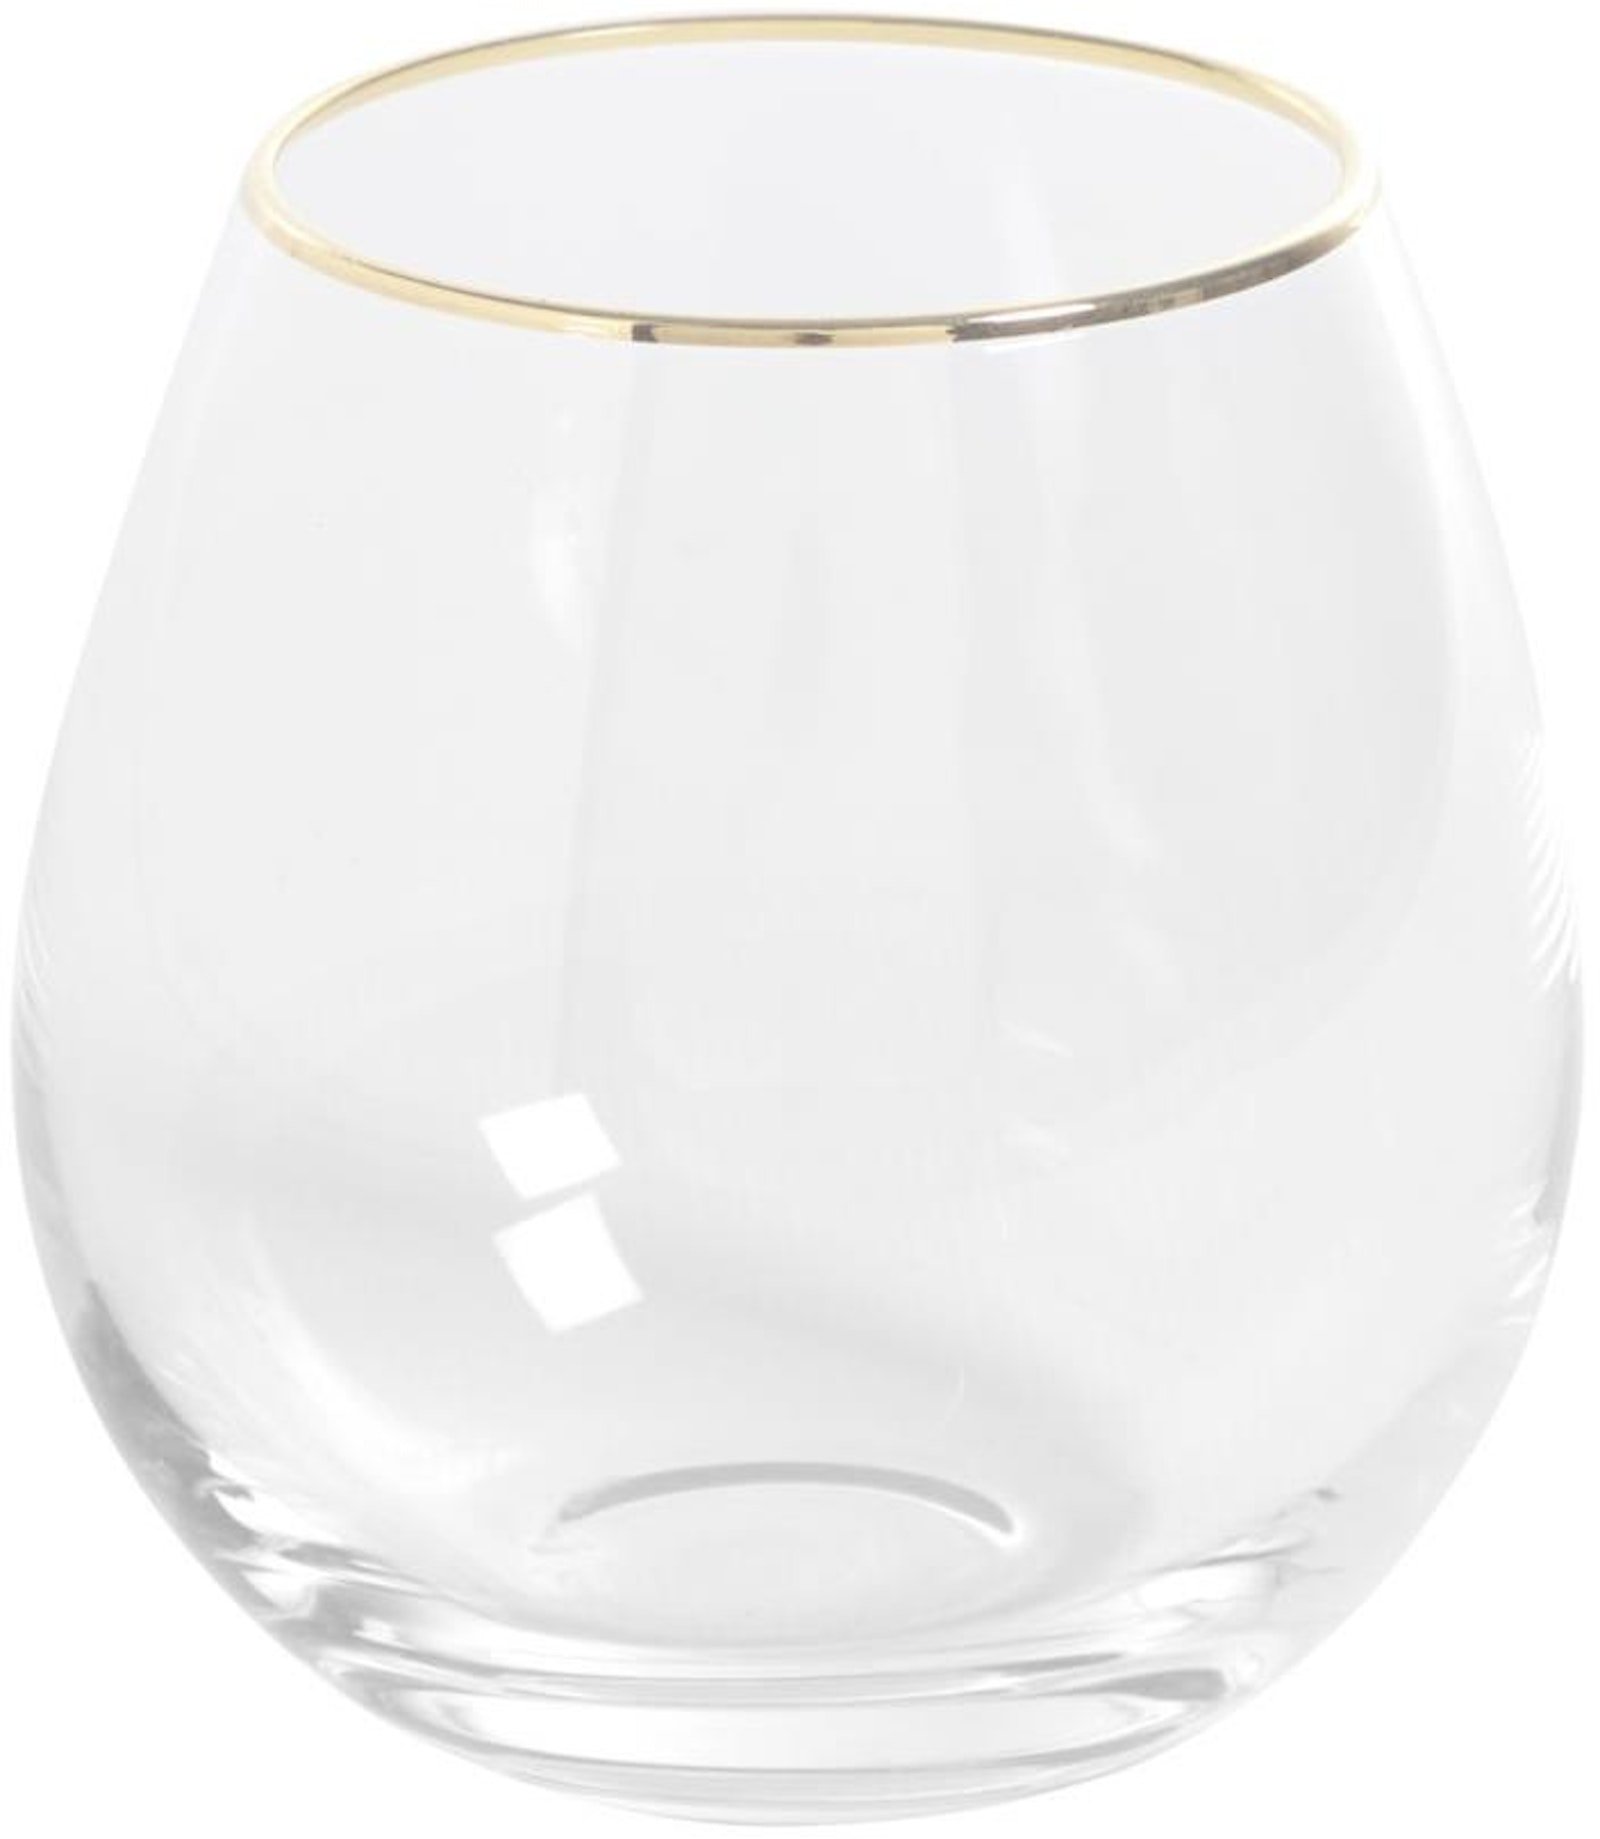 2: Rasine, Drikkeglas, Glas by LaForma (H: 10 cm. x B: 9 cm. x L: 9 cm., Guld/Klar)